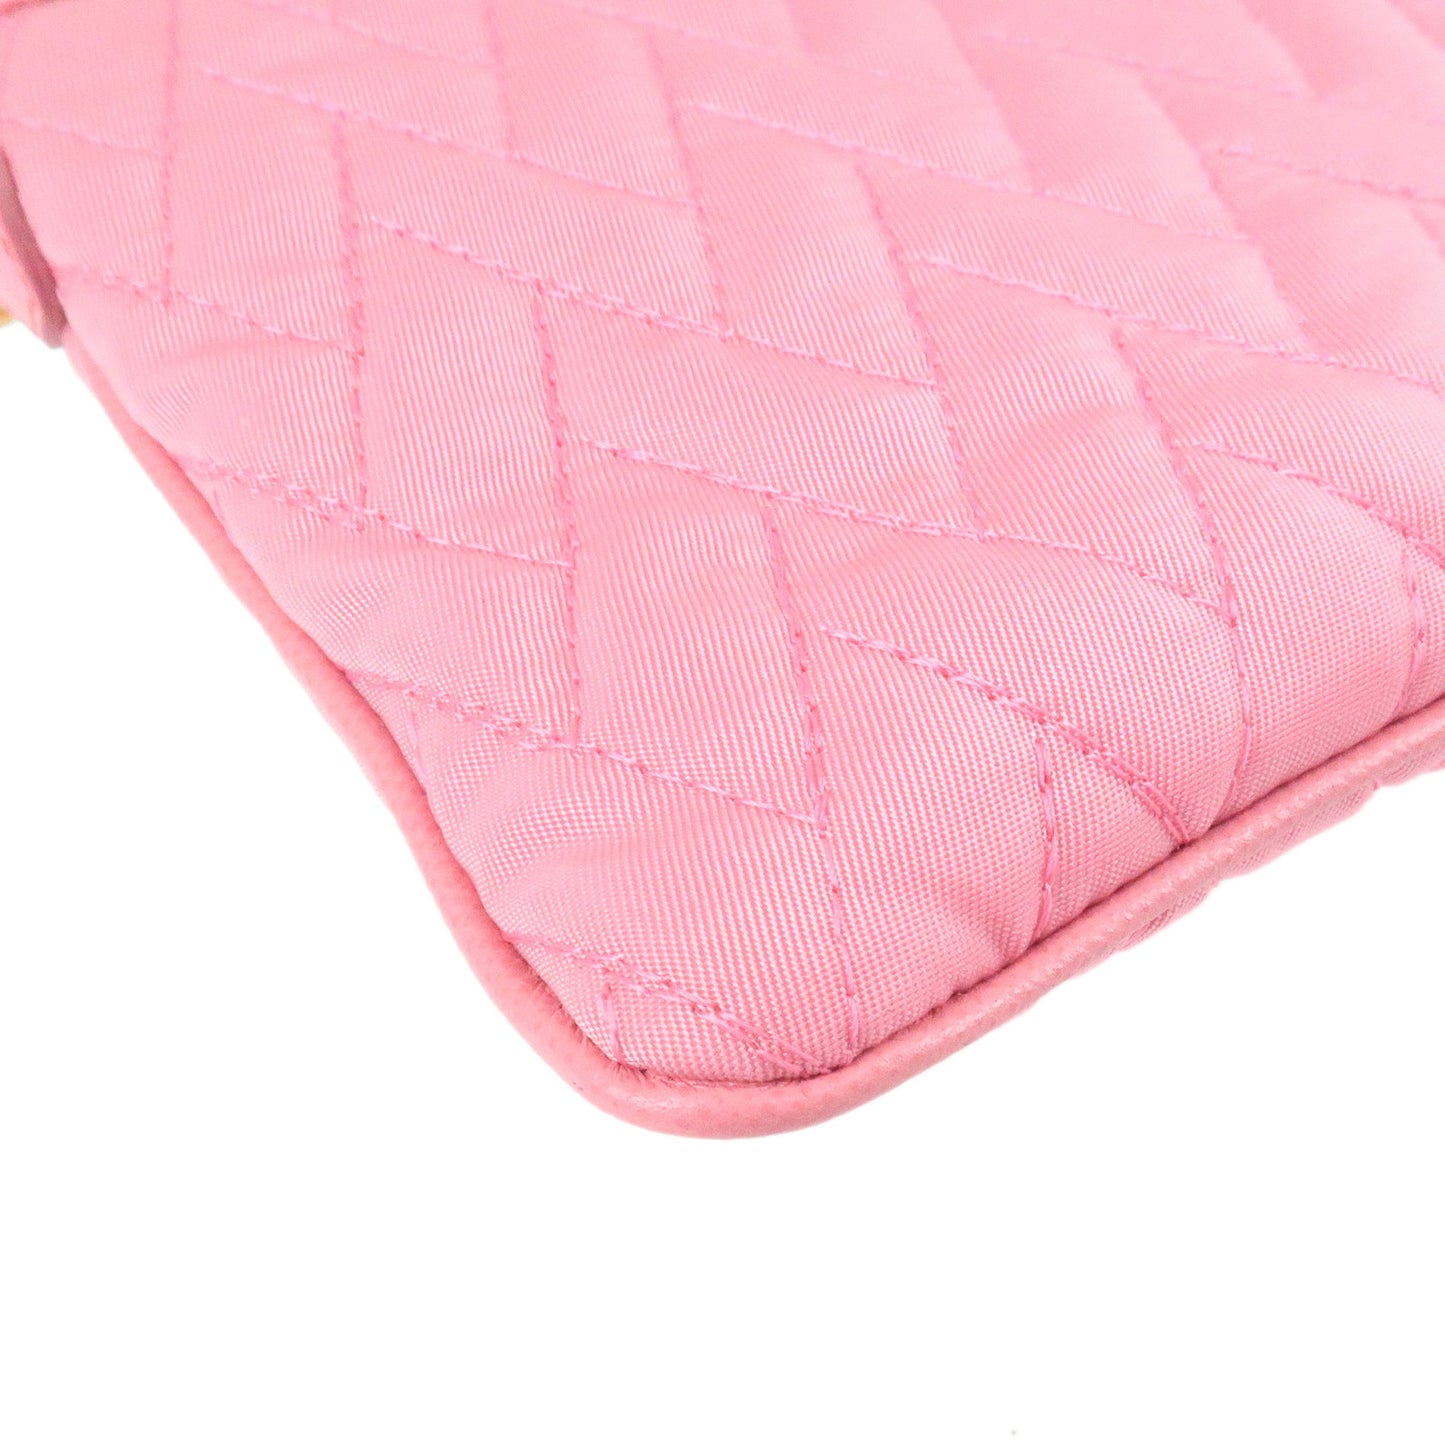 PRADA Logo Nylon Leather Chain Shoulder Bag Pink 1M1283